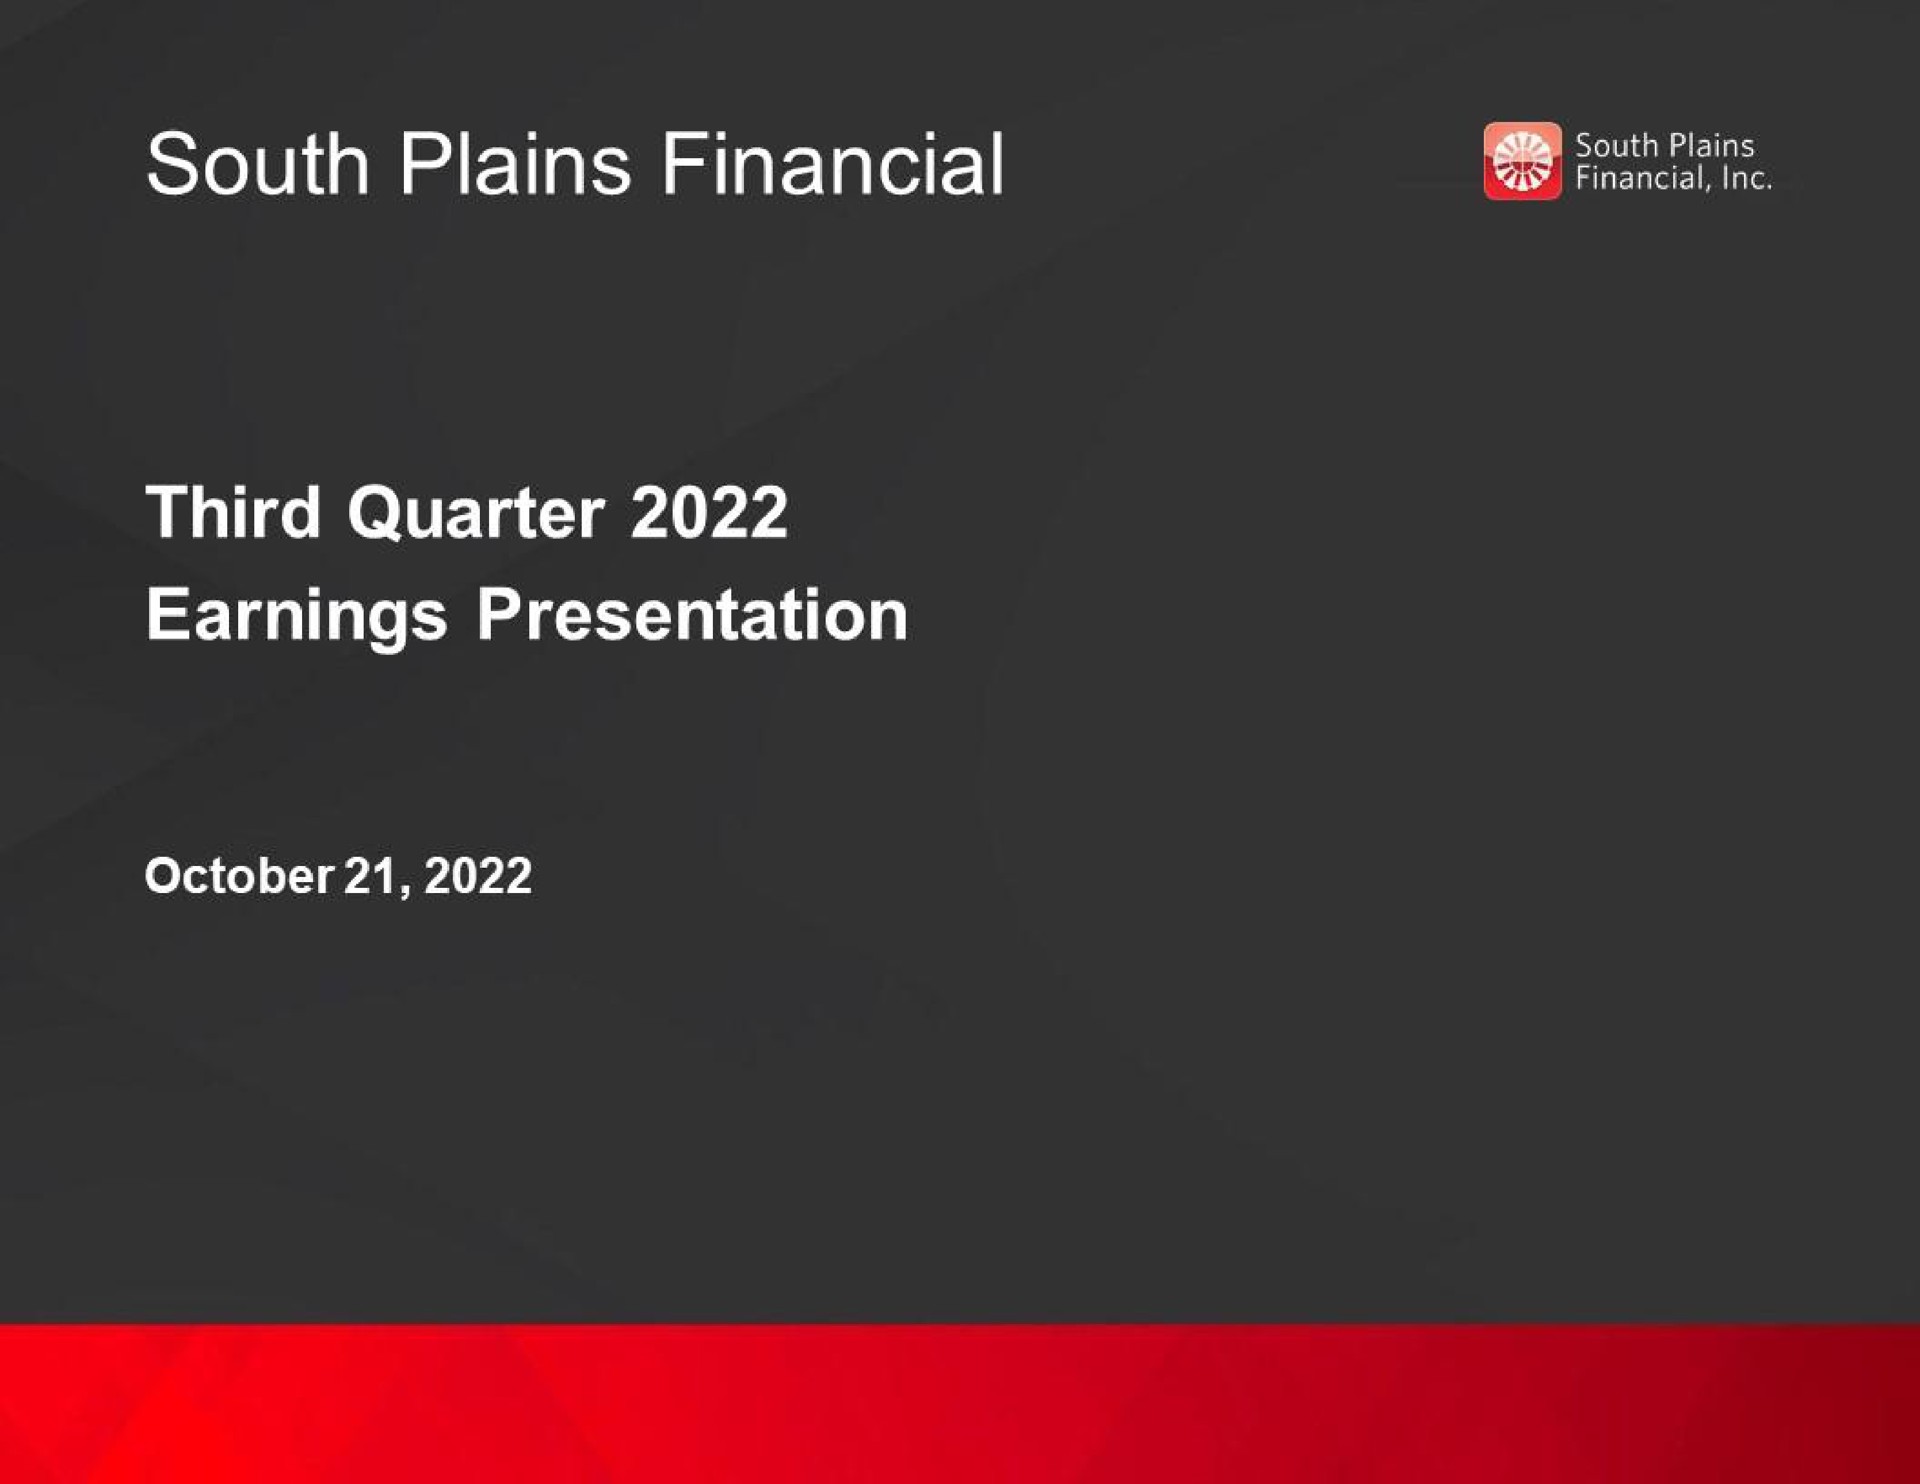 south plains financial third quarter earnings presentation | South Plains Financial